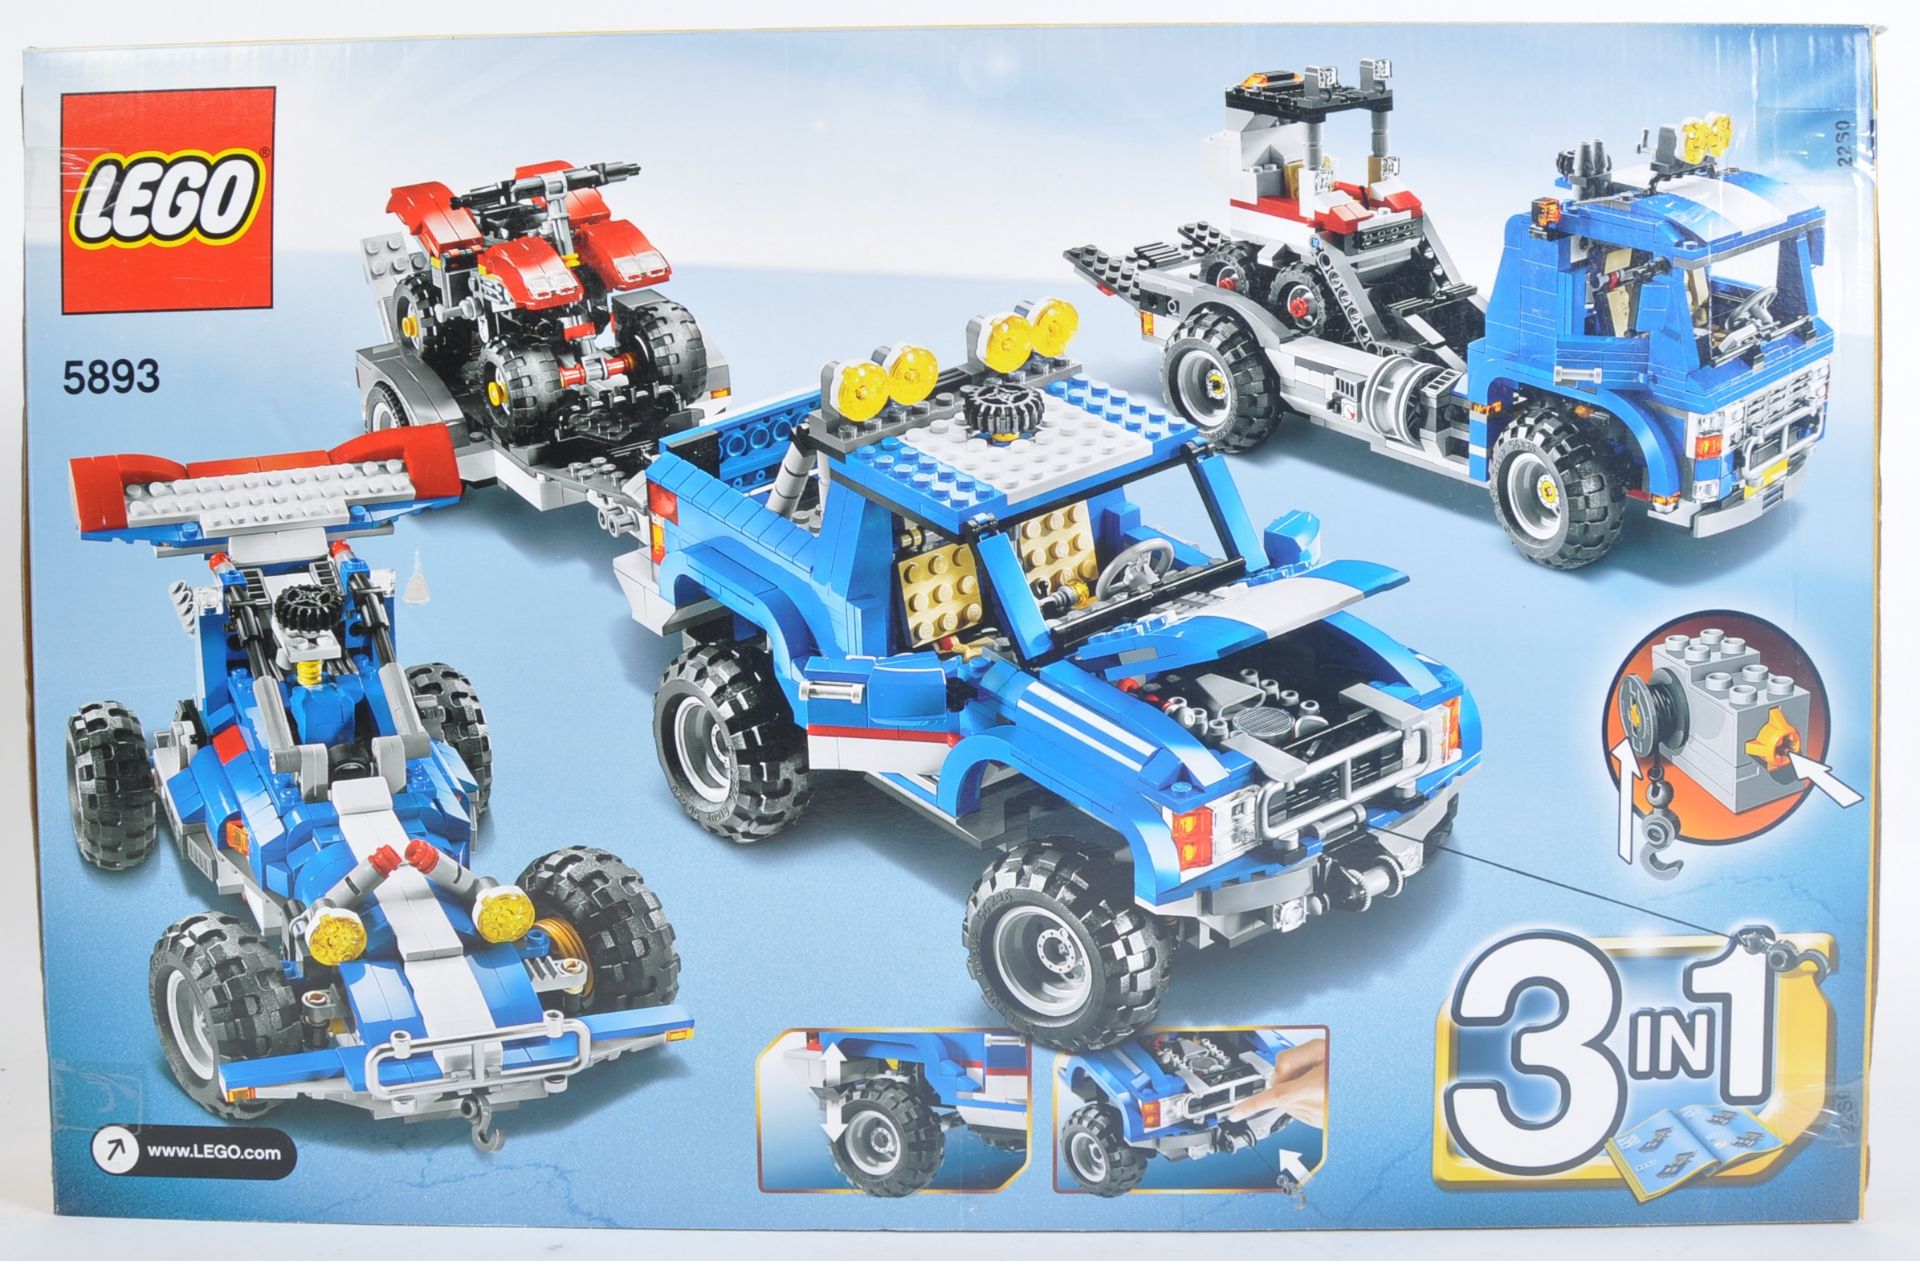 LEGO SET - LEGO CREATOR - 5893 - OFF ROAD POWER - Image 2 of 4